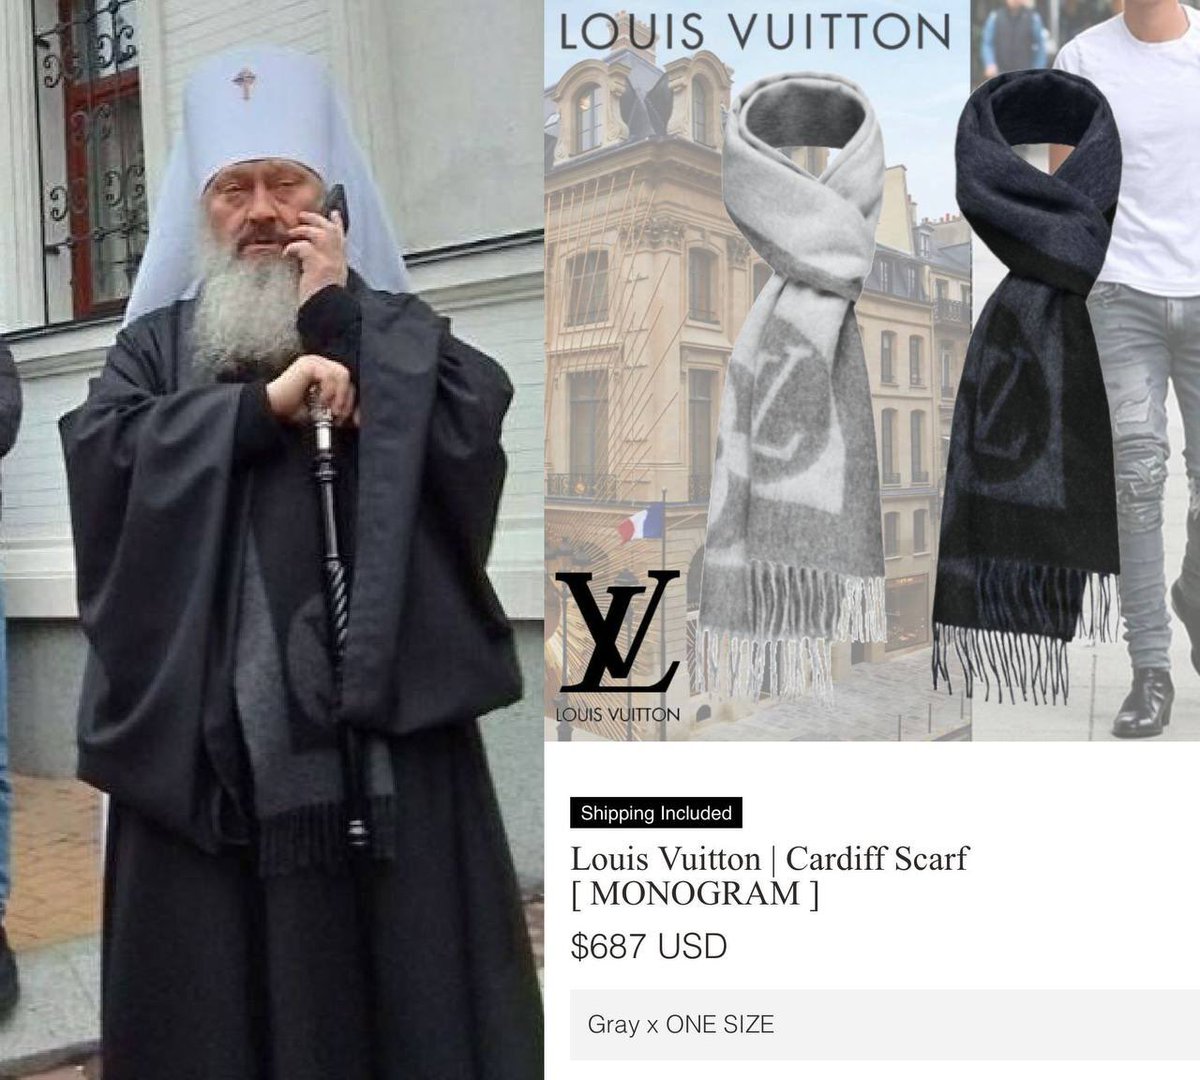 Louis Vuitton Cardiff Scarf